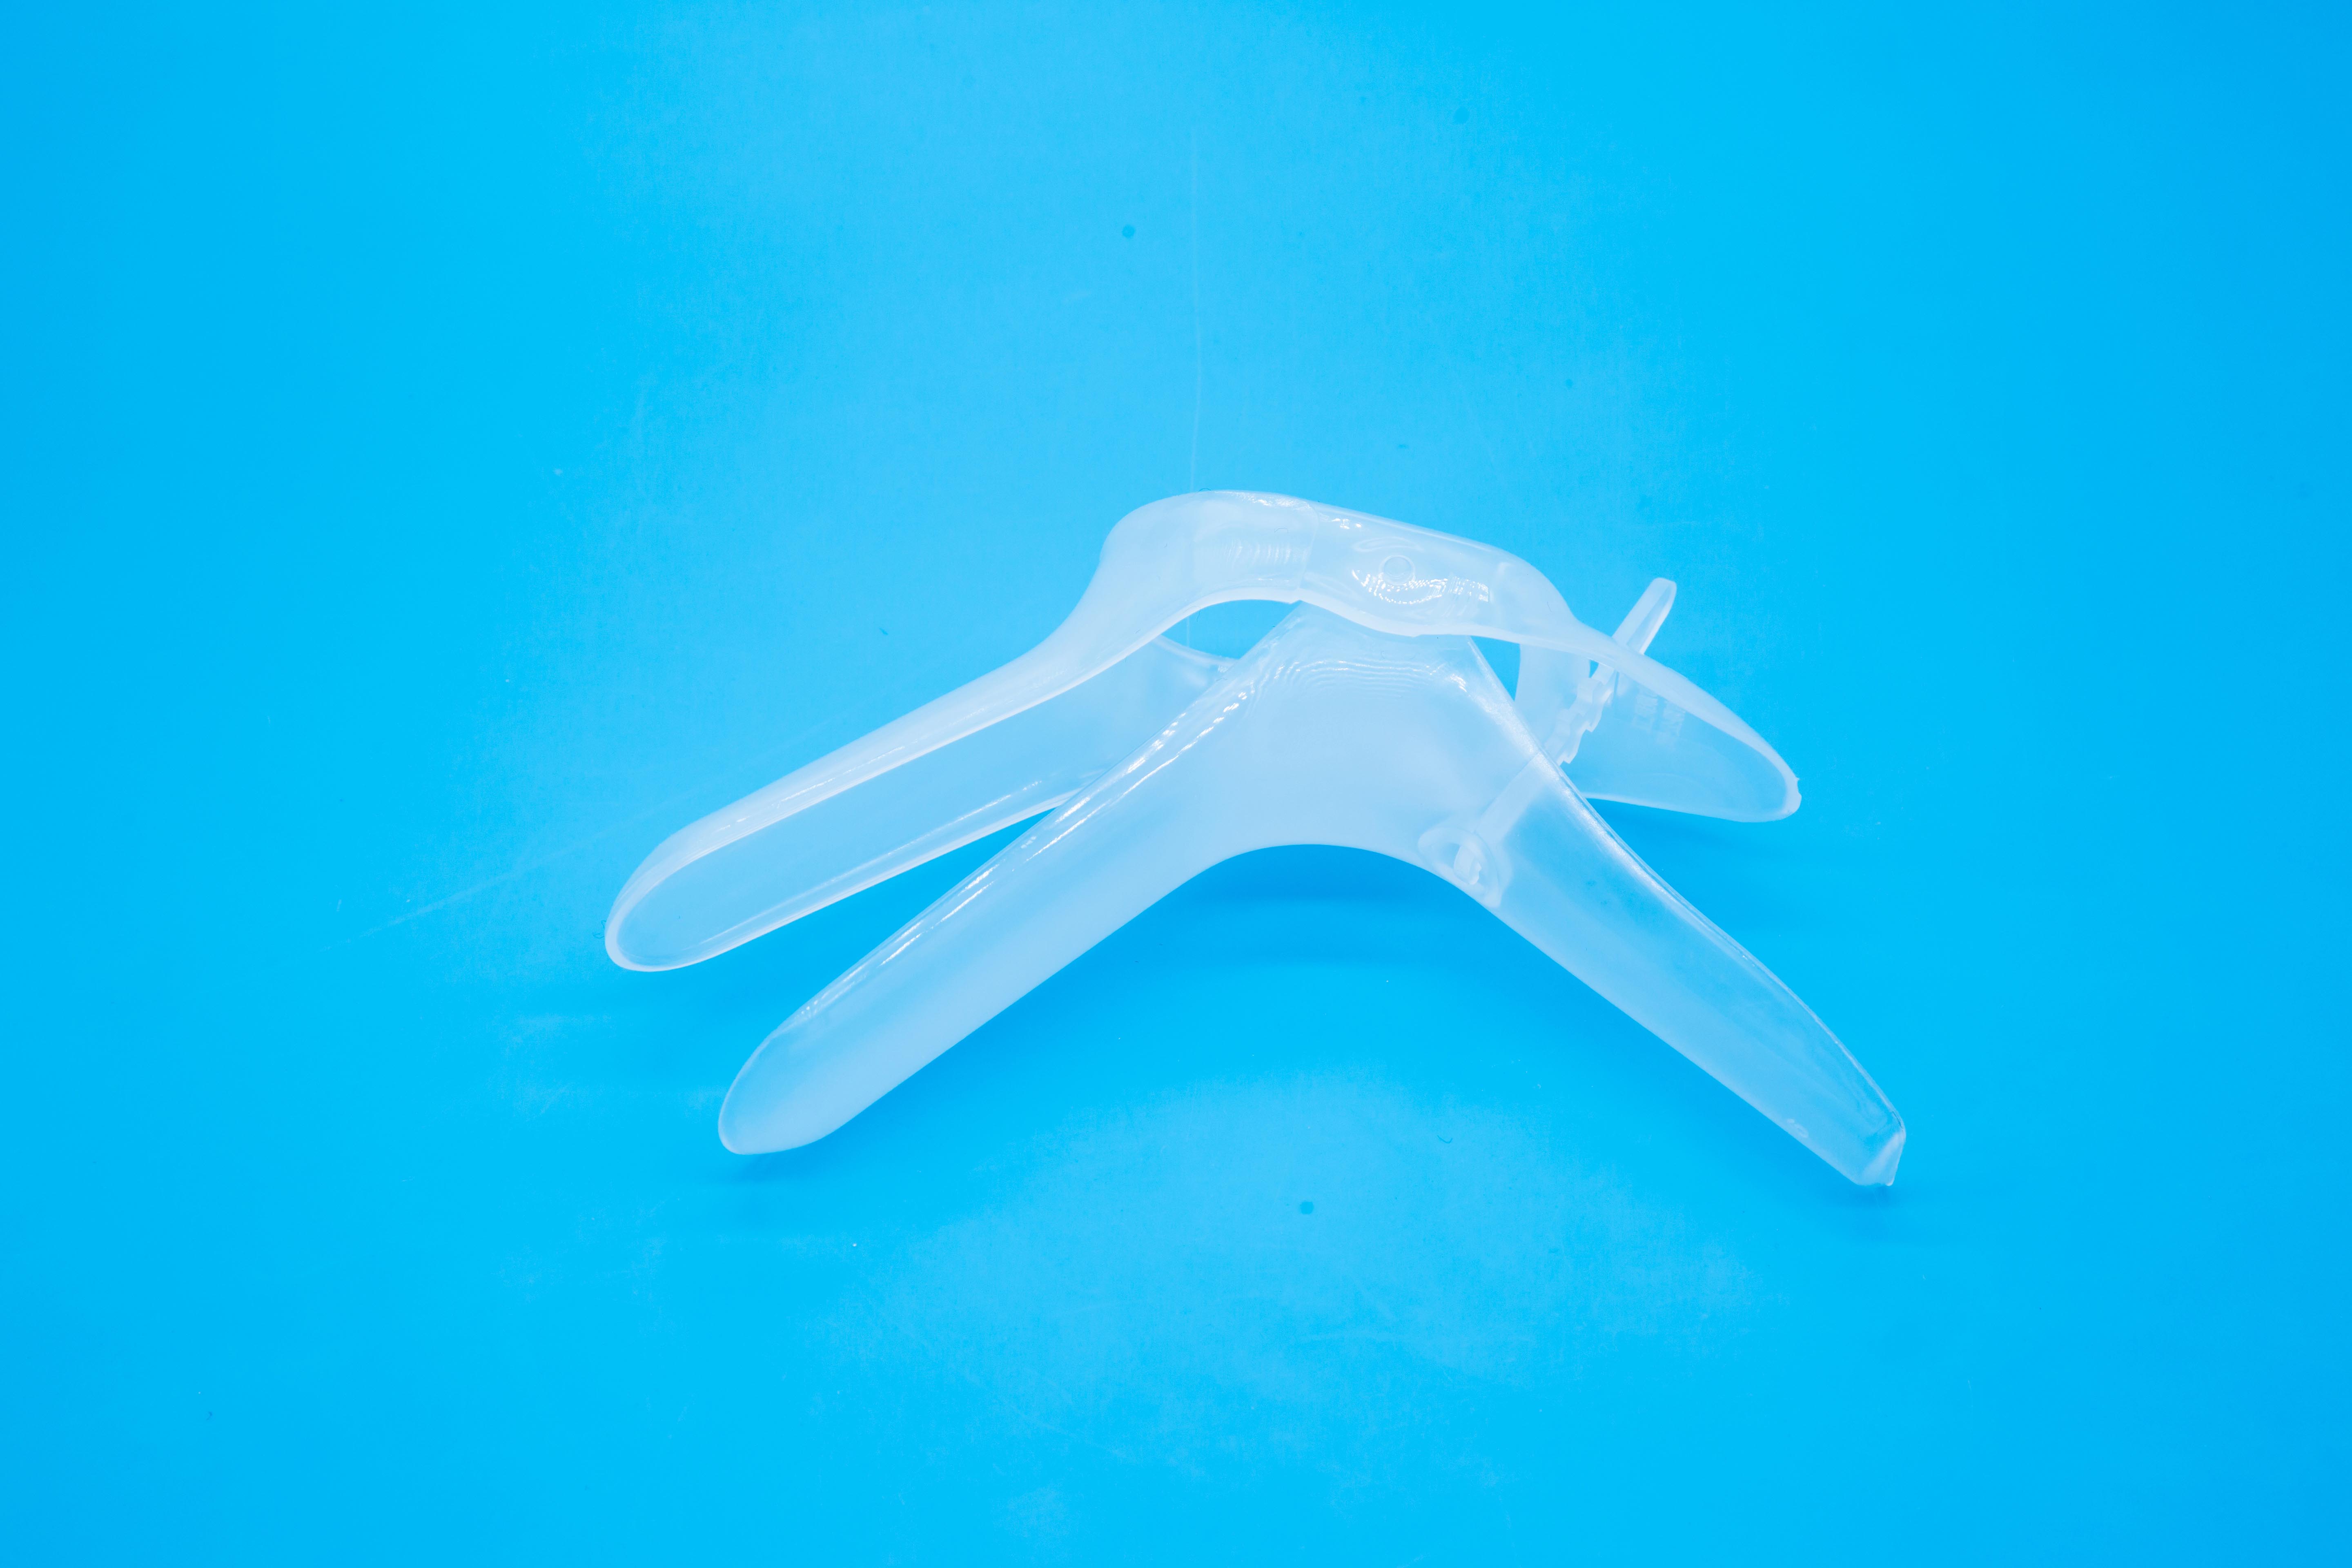 Sterile vaginal dilator for single use